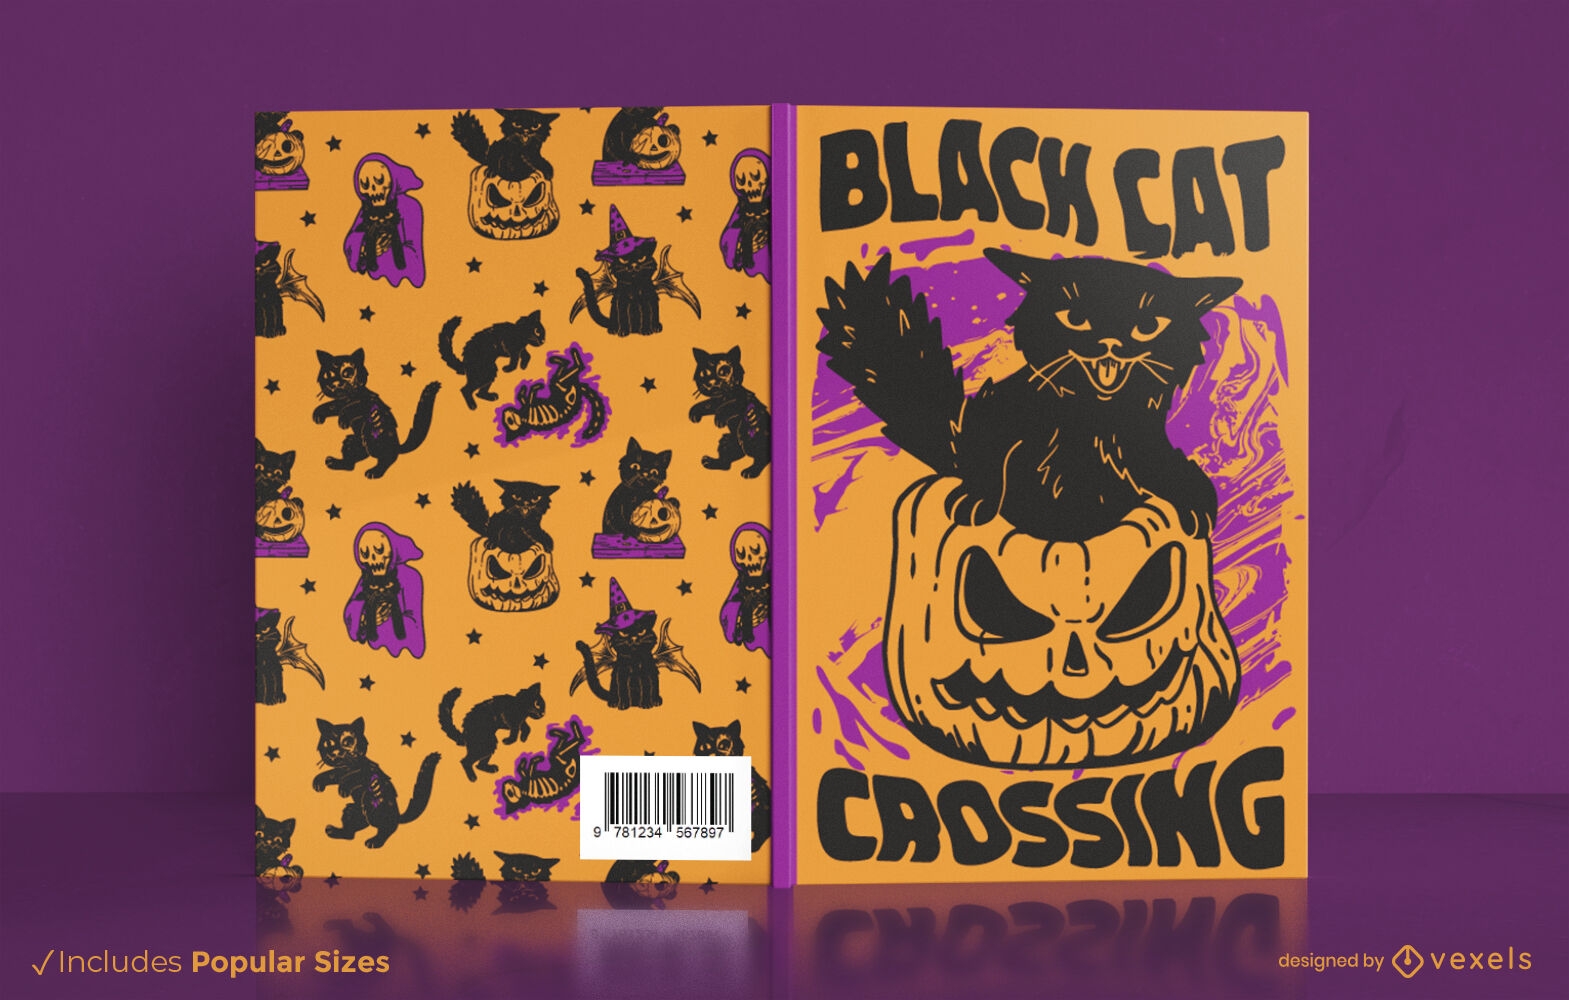 Black cat Halloween book cover design